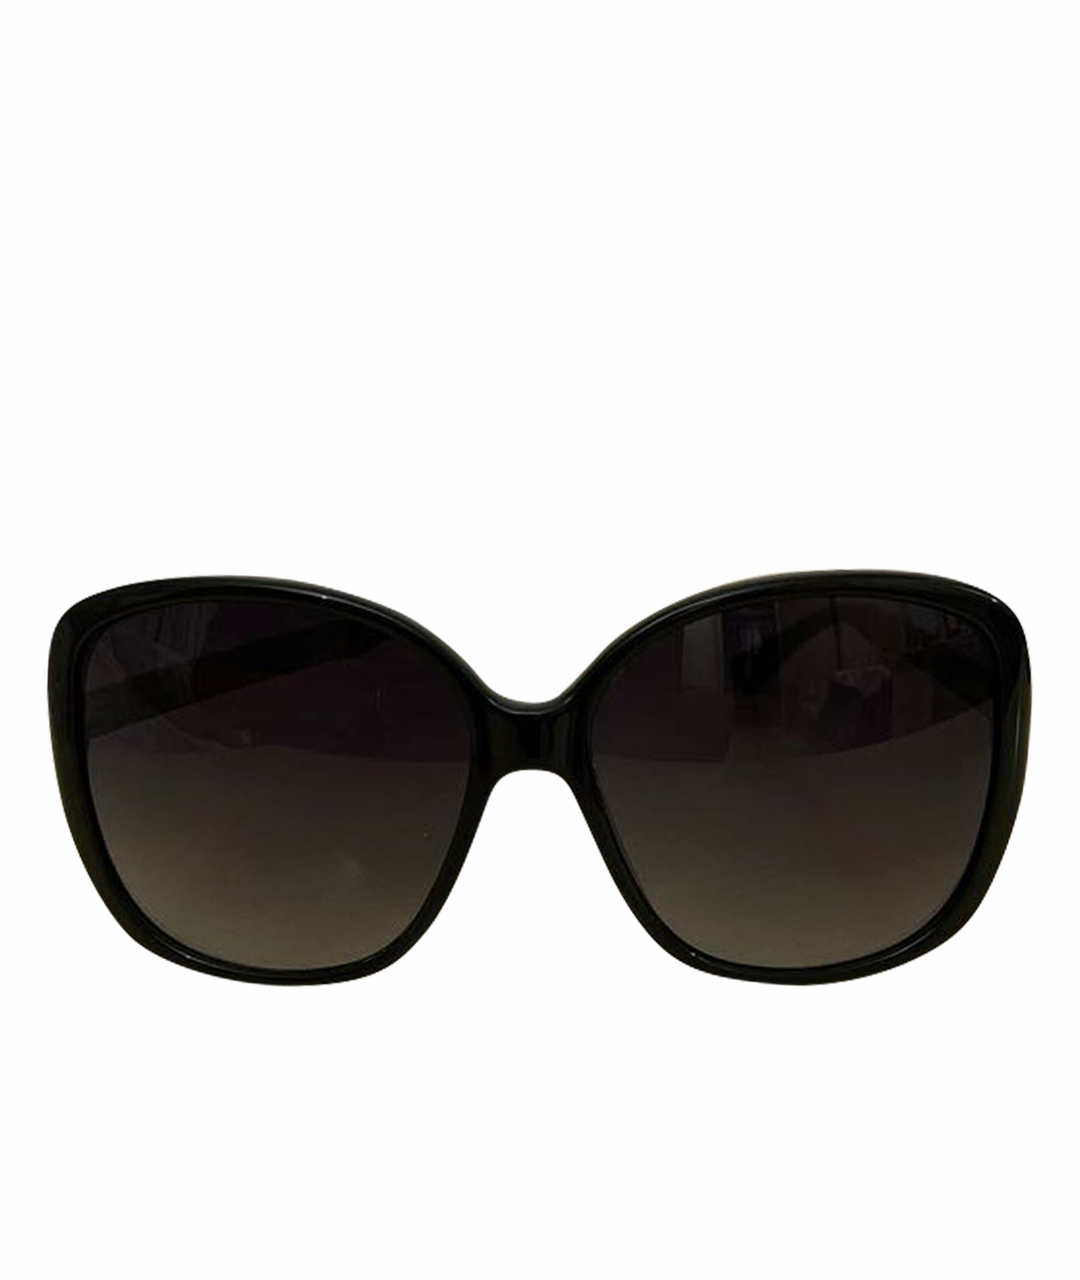 MARC BY MARC JACOBS Черные пластиковые солнцезащитные очки, фото 1